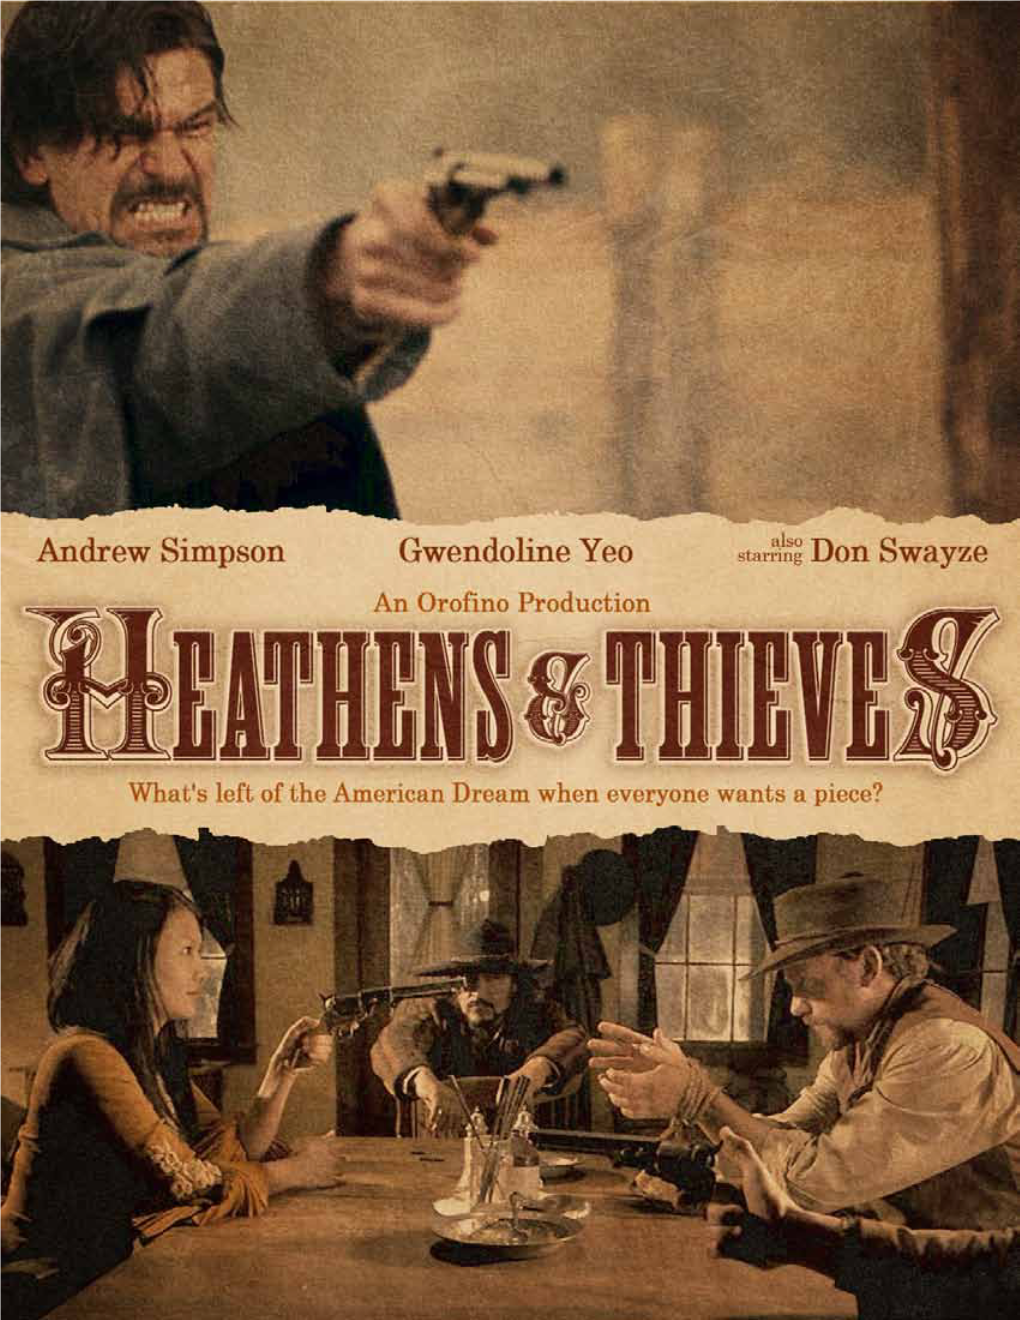 Heathens & Thieves Press Kit (Pdf)